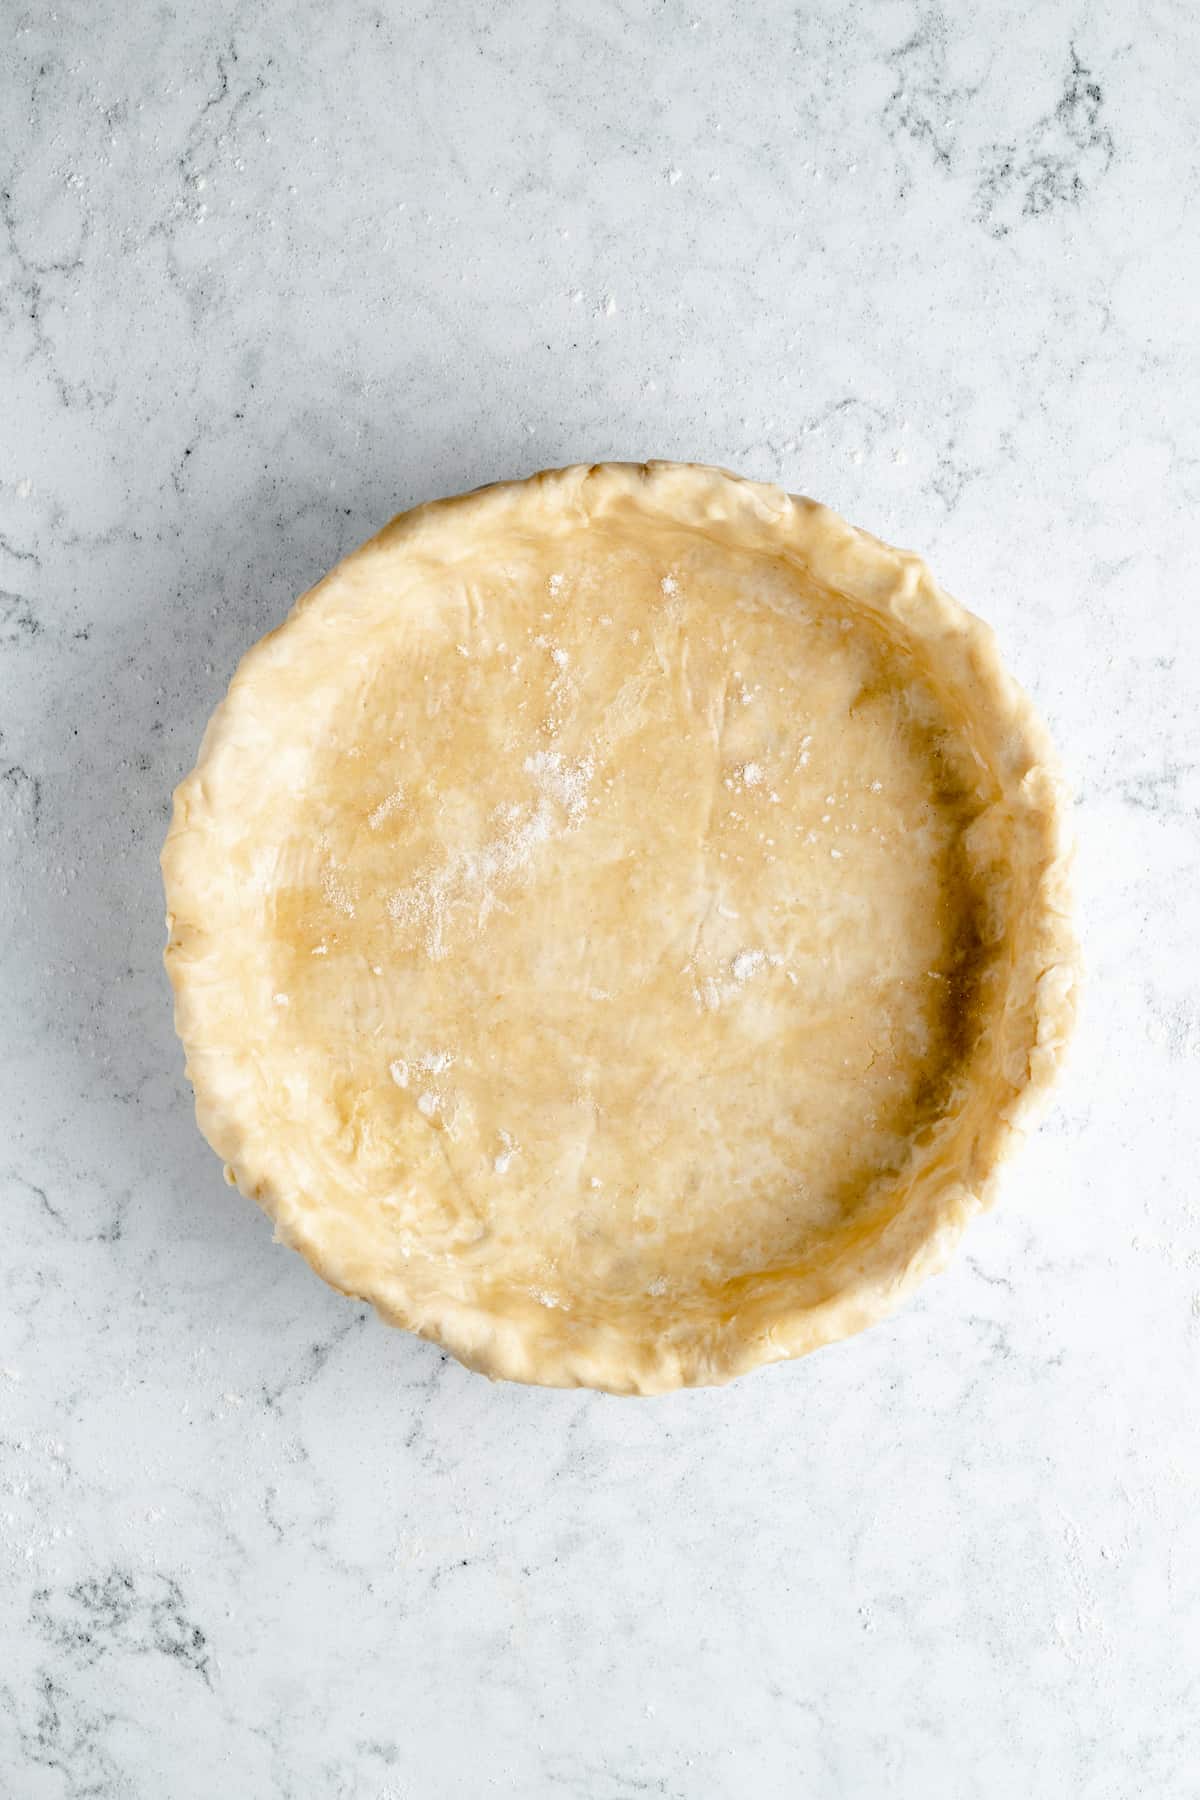 Vegan pie crust in a baking dish.